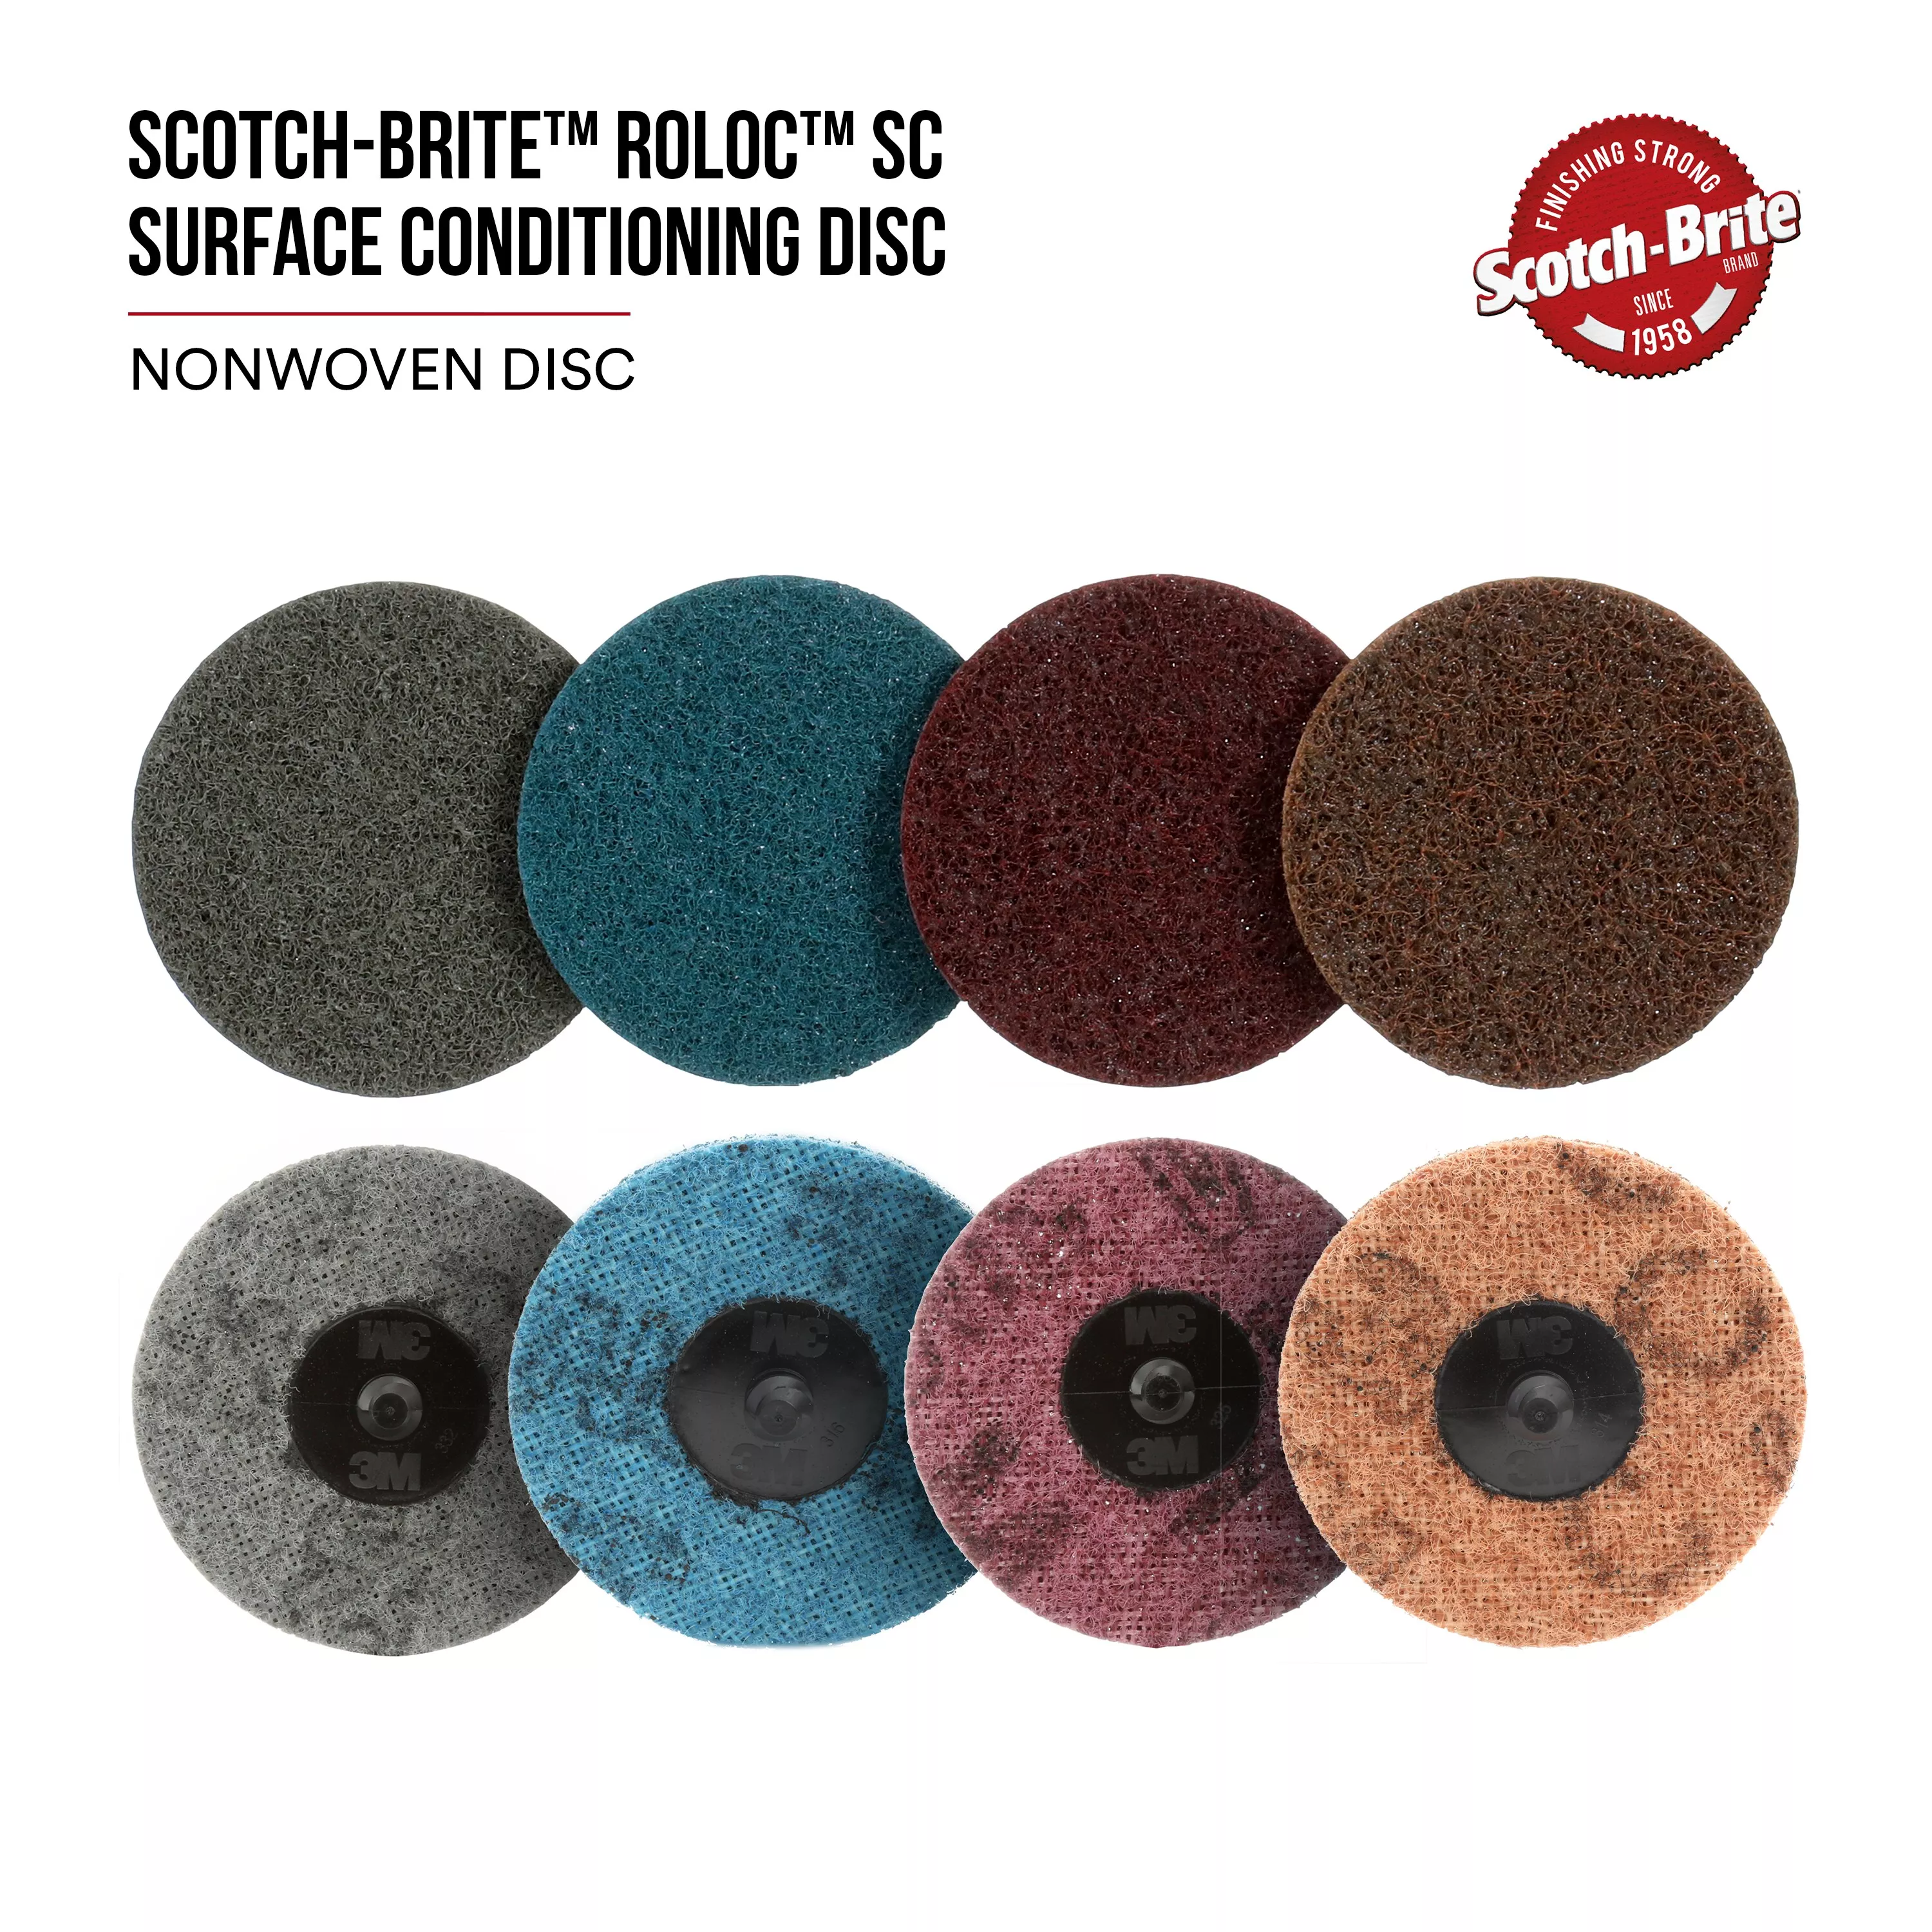 SKU 7100035125 | Scotch-Brite™ Roloc™ Surface Conditioning Disc